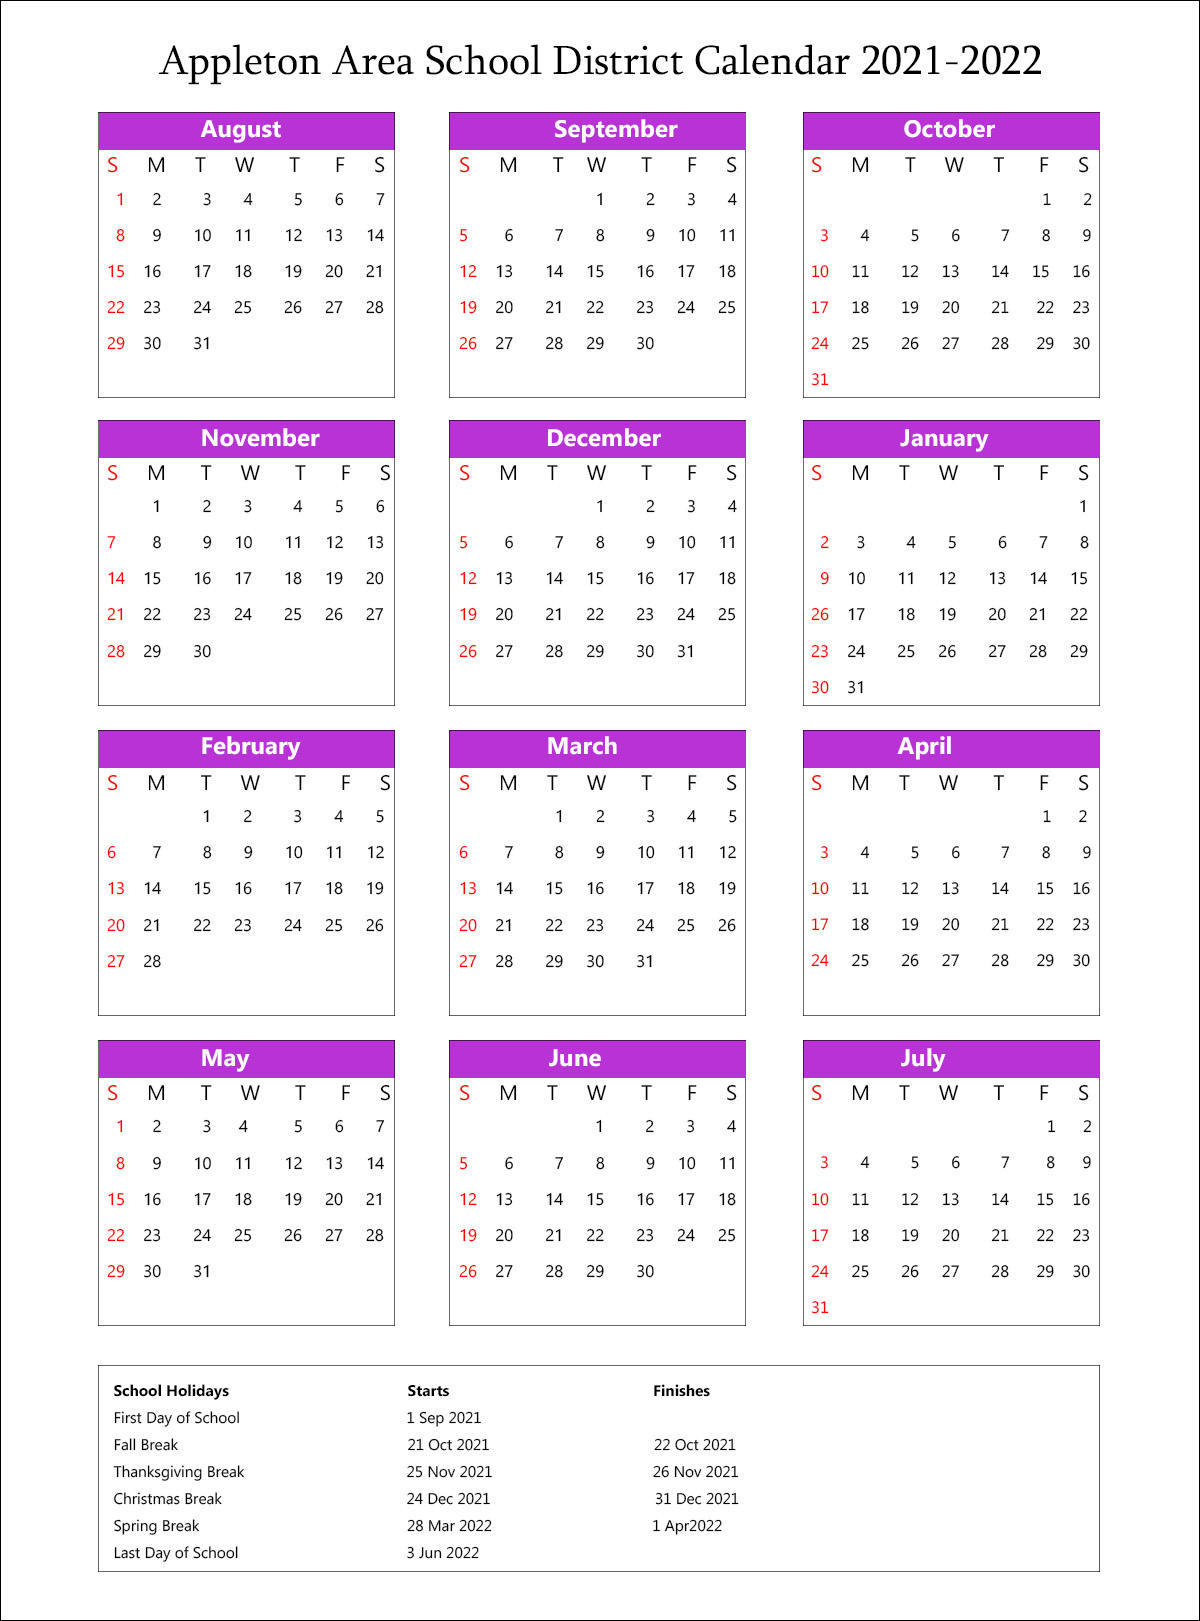 Appleton Area School District, Wisconsin Calendar Holidays 2021